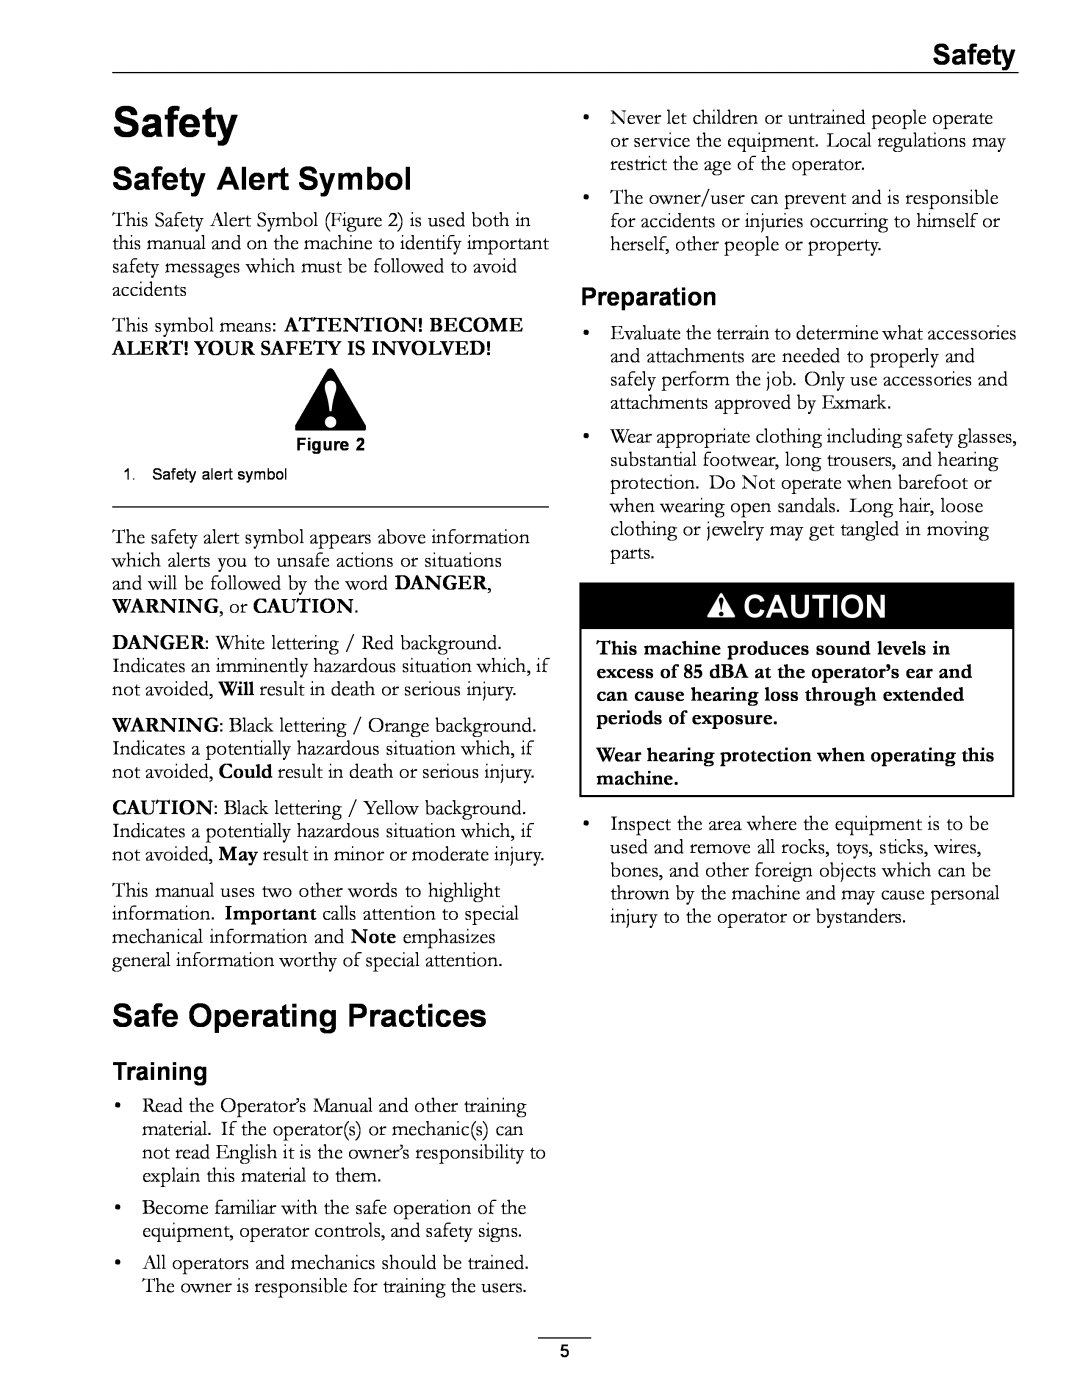 Exmark TT23KAEP Safety Alert Symbol, Safe Operating Practices, Training, Preparation, Alert! Your Safety Is Involved 